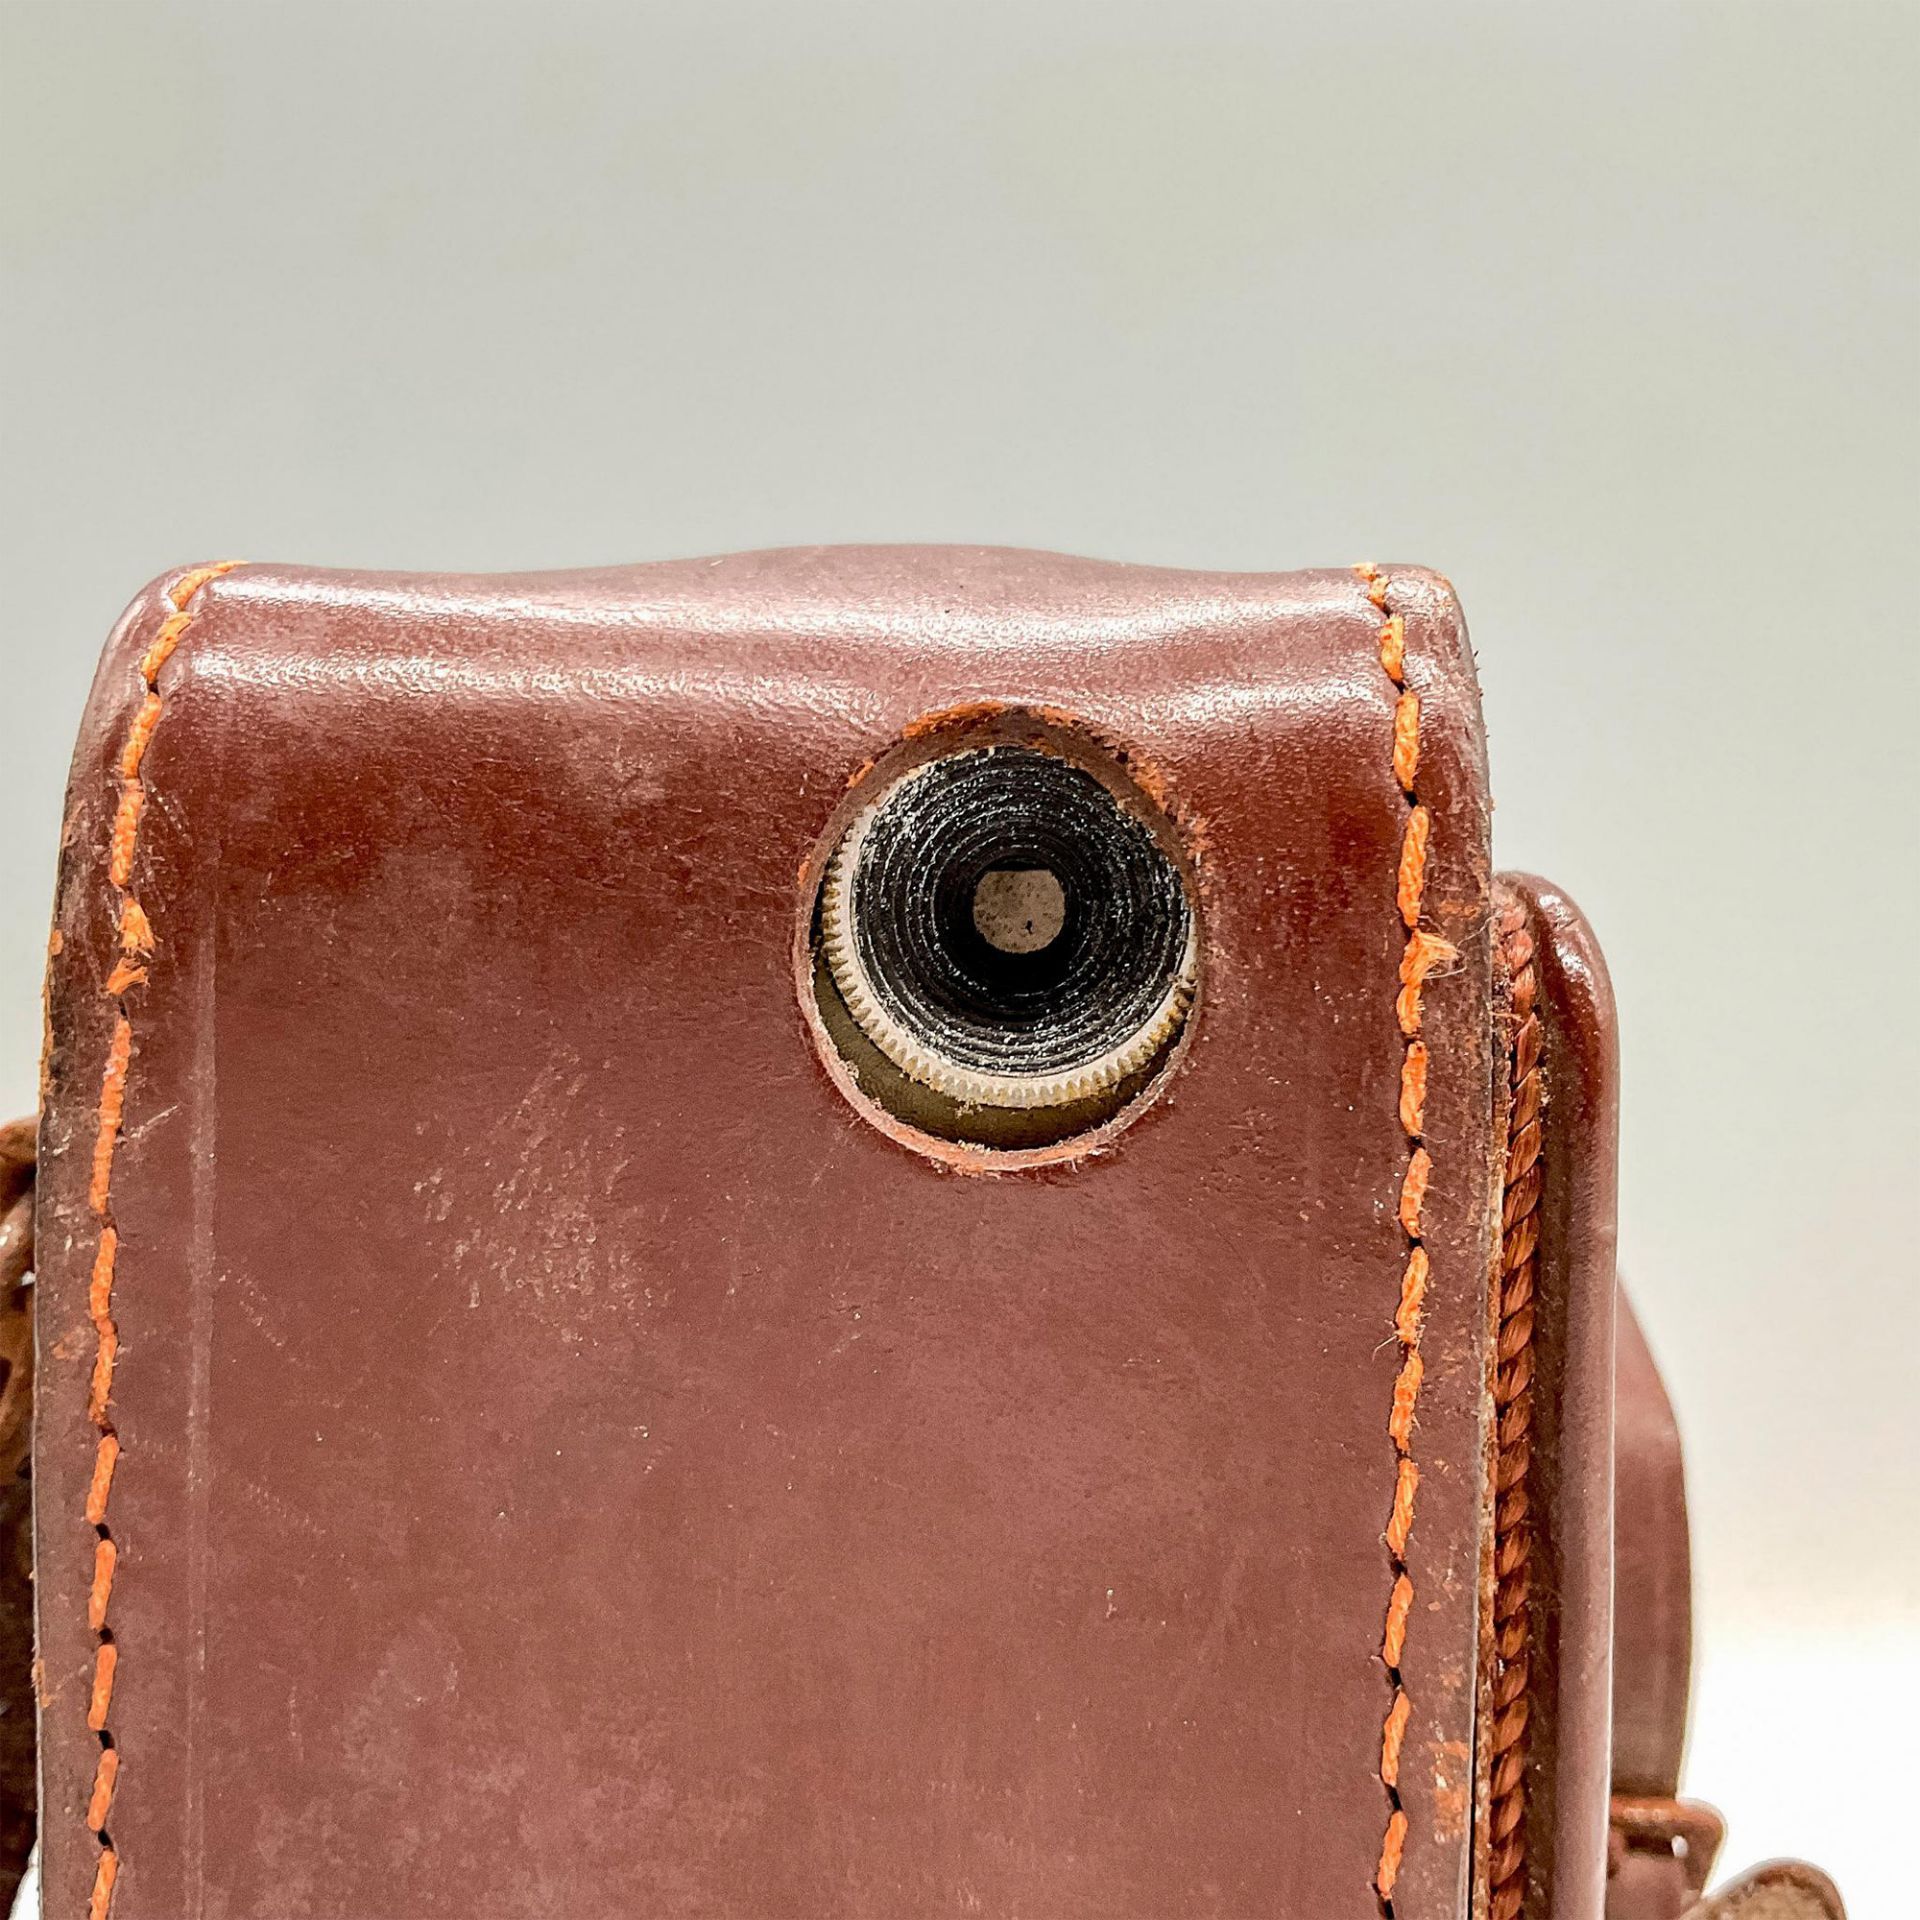 Eumig C3 8mm Cine Camera with Original Leather Case - Image 8 of 9